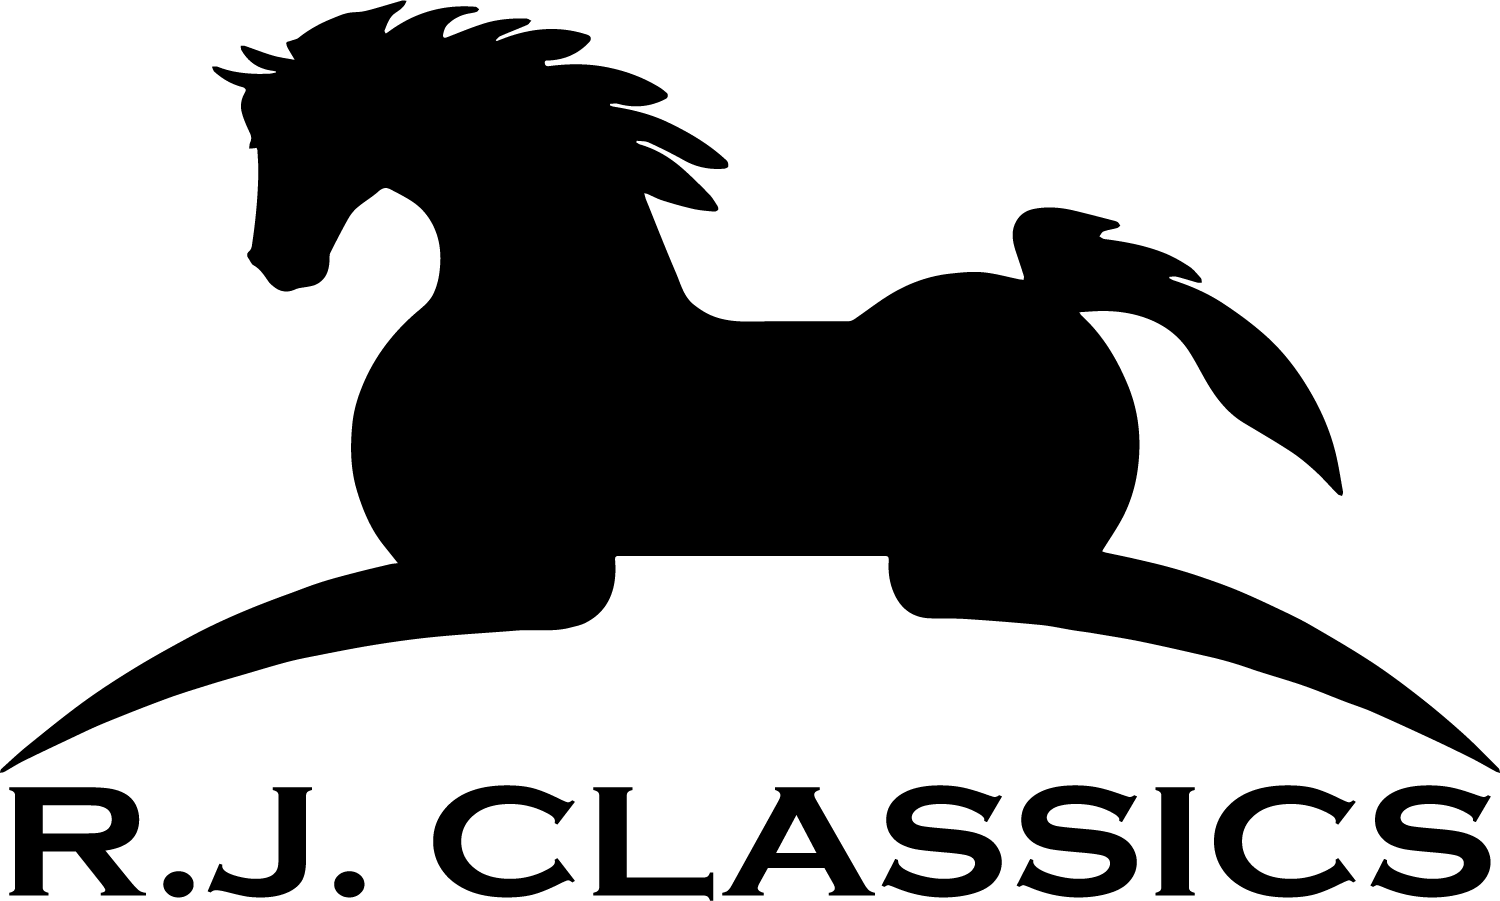 RJ C Black Primary Vector Logo